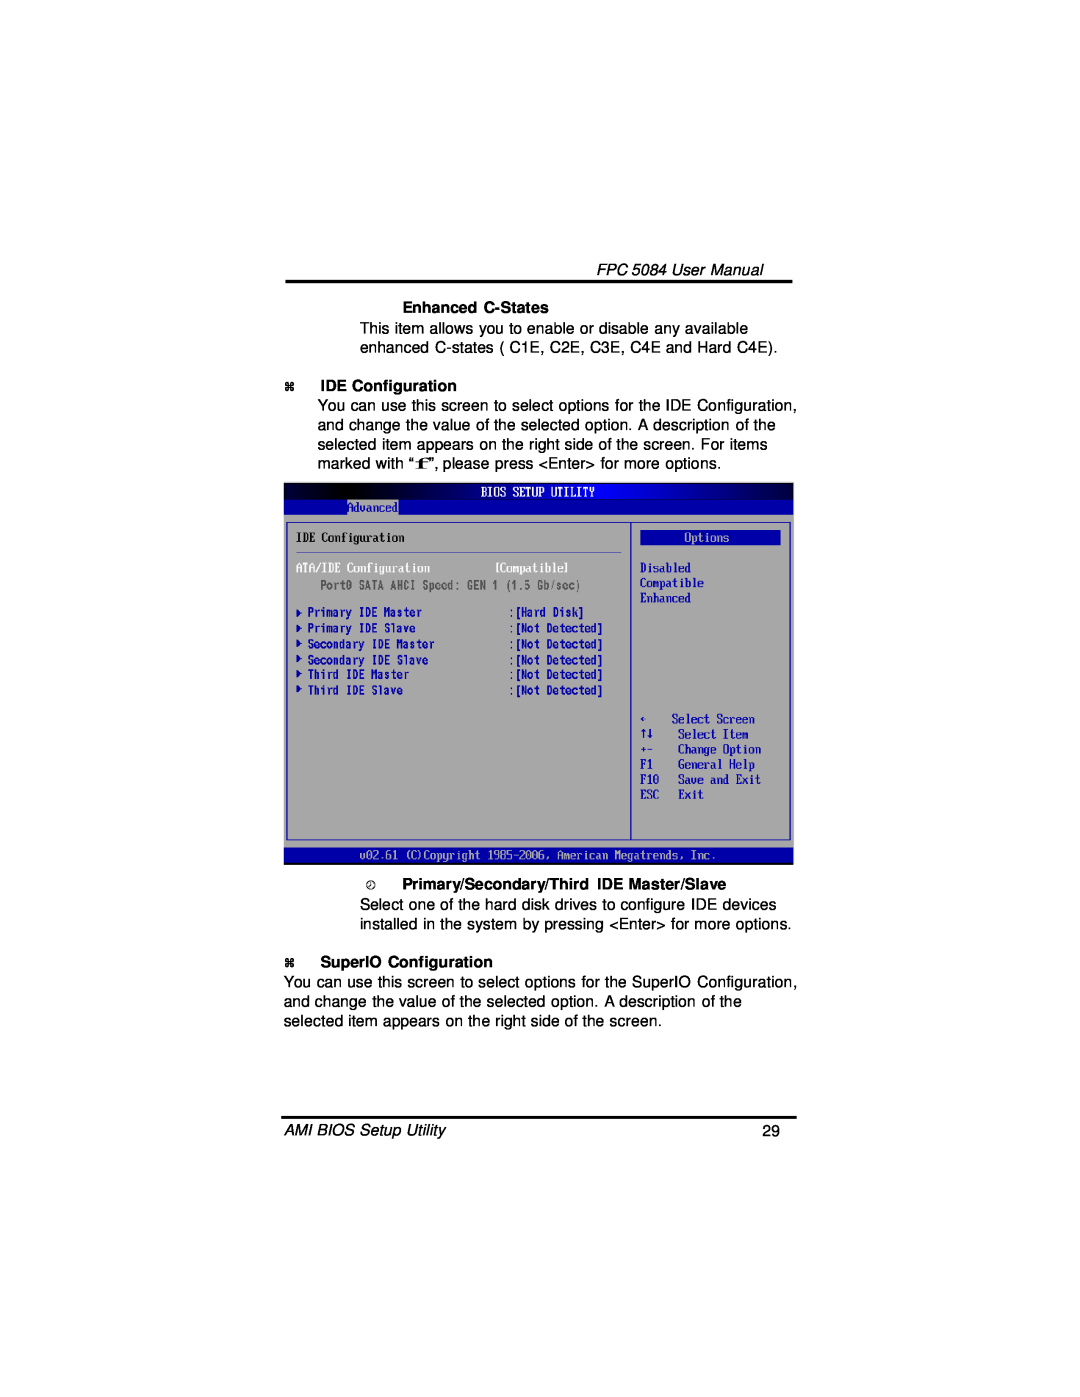 Intel N270, FPC 5084 user manual Enhanced C-States, IDE Configuration, SuperIO Configuration 